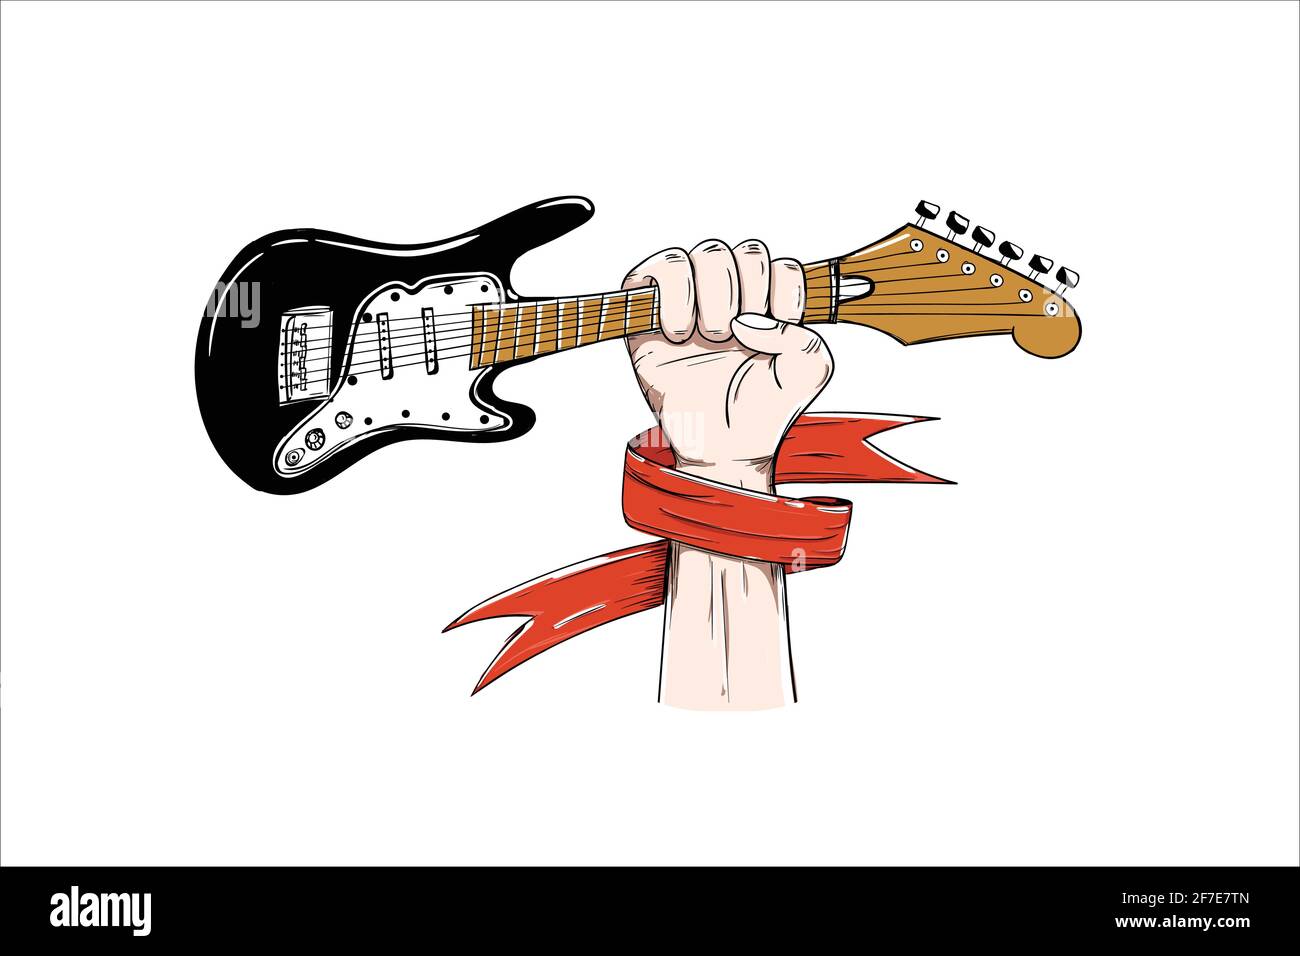 guitarra eléctrica de mano con cinta roja concepto vector ilustración  Imagen Vector de stock - Alamy